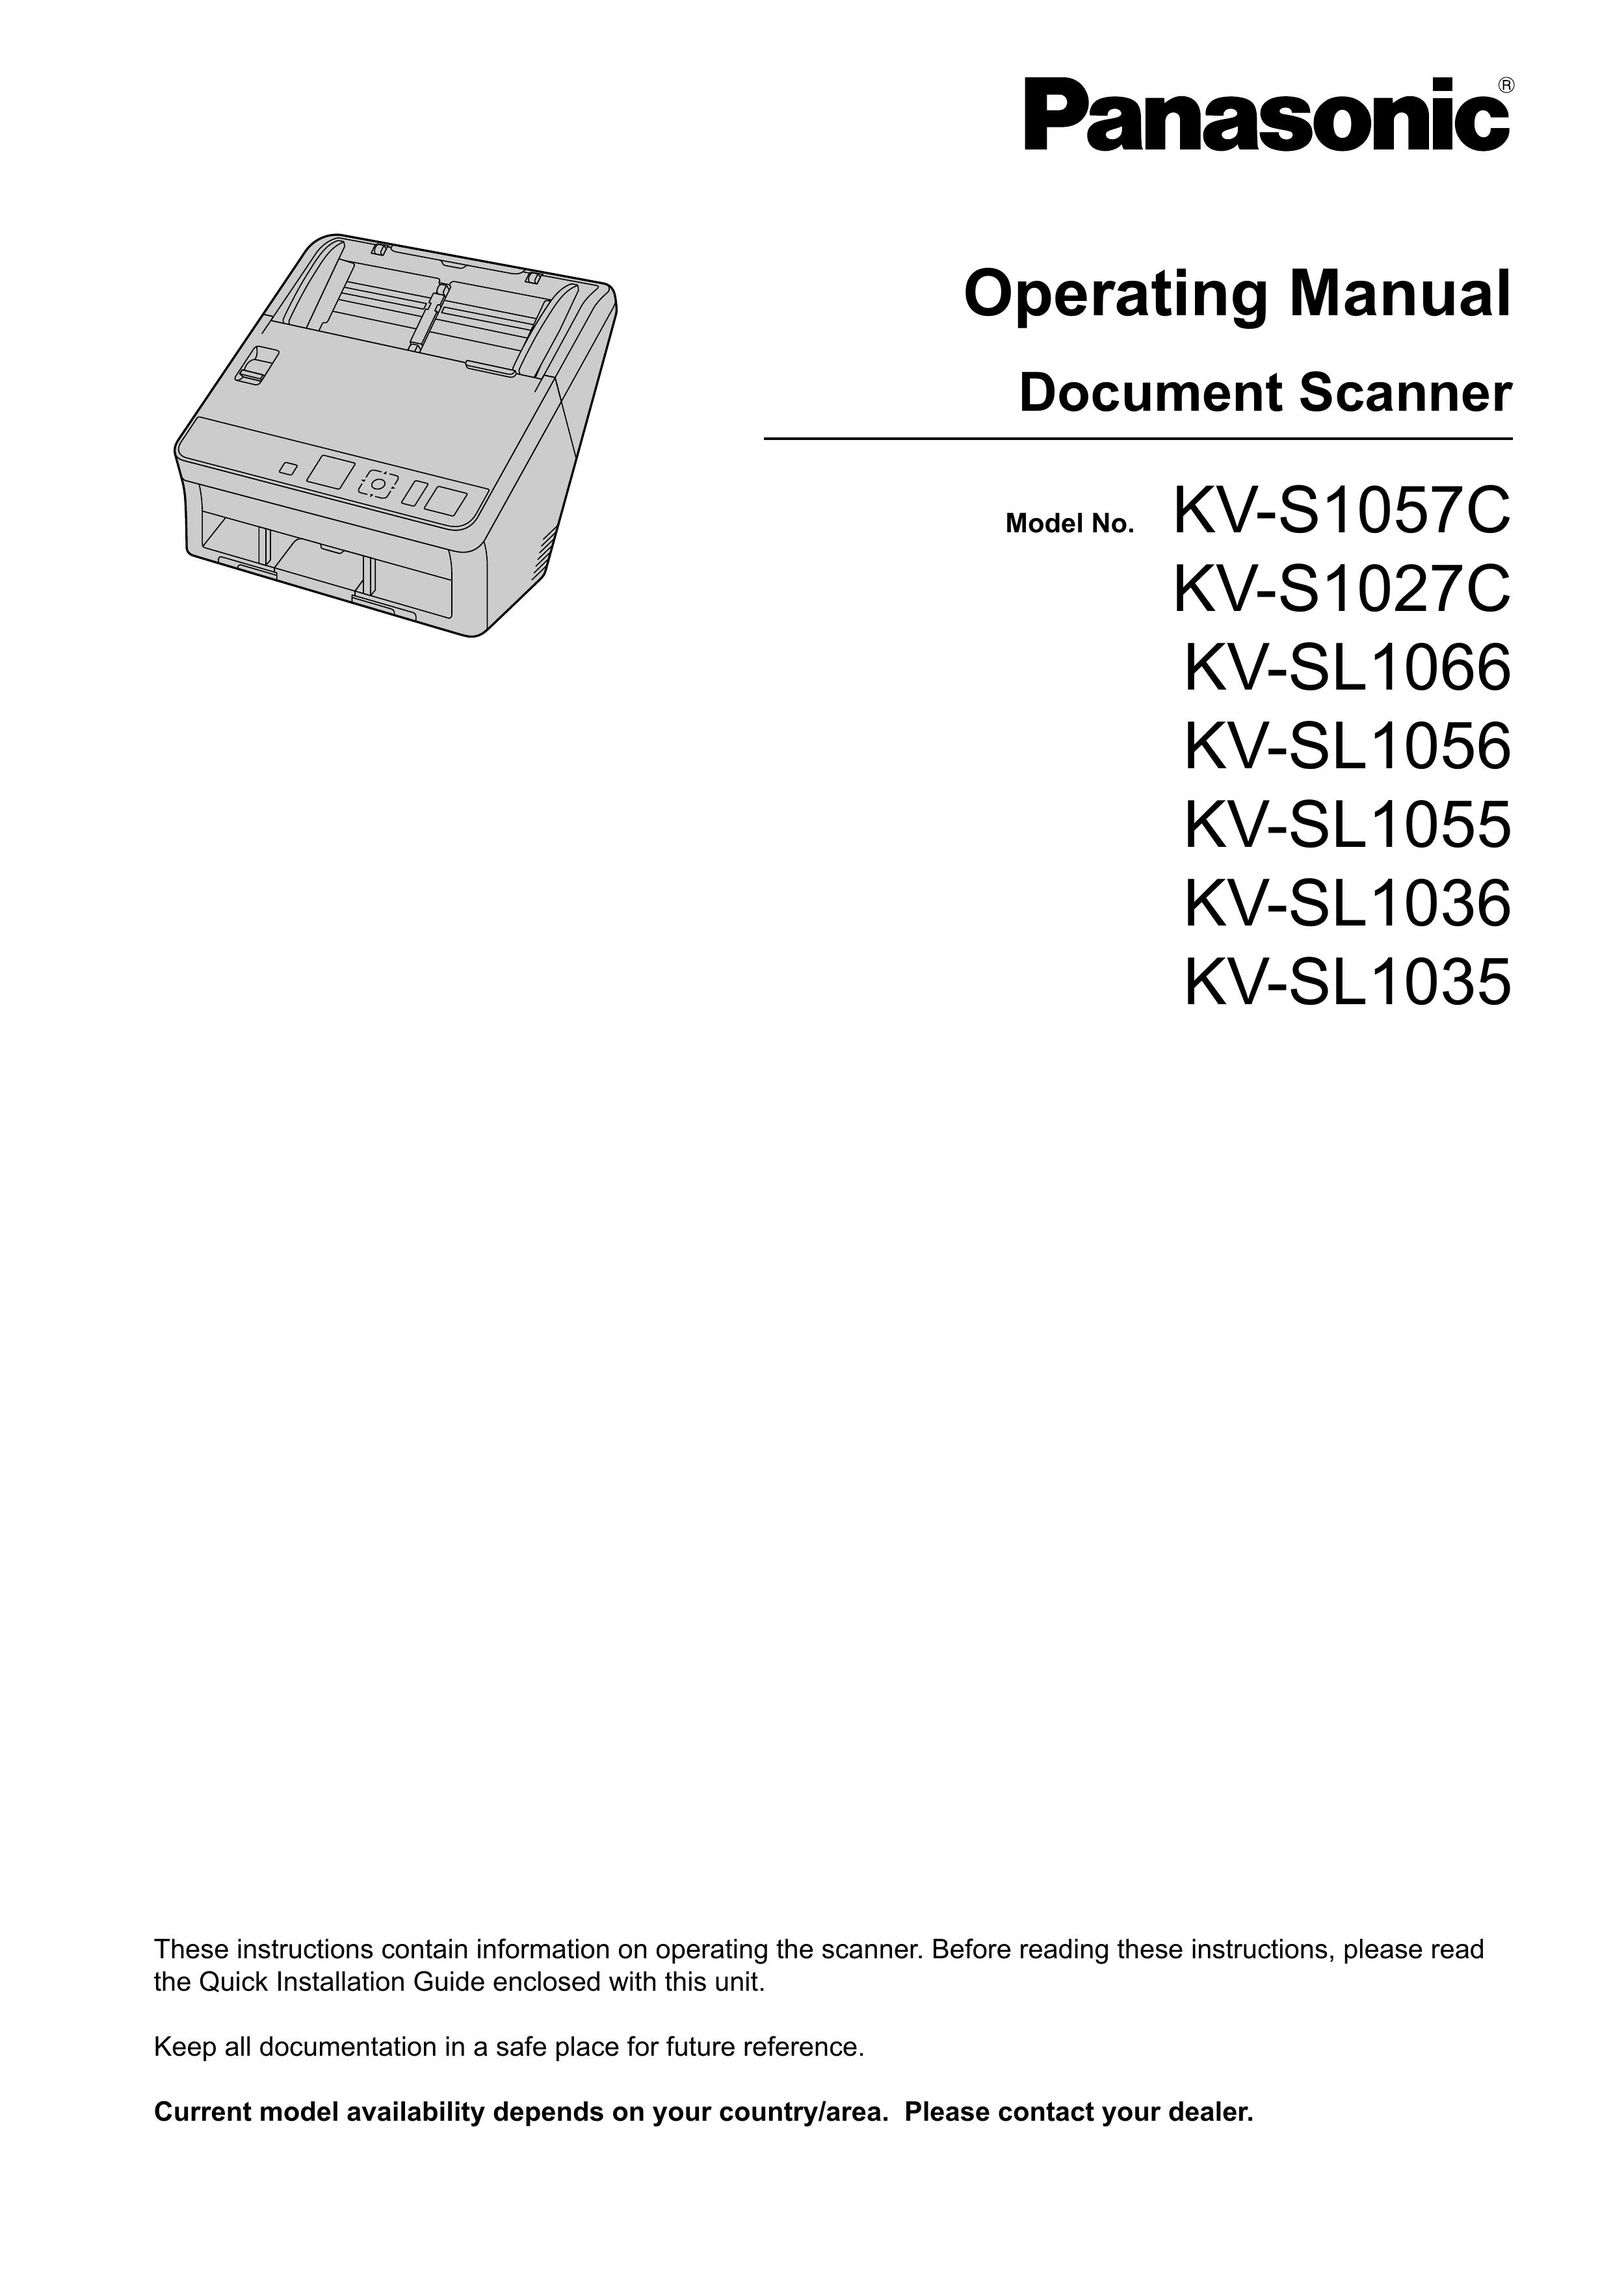 Panasonic KV-SL1066 Scanner User Manual